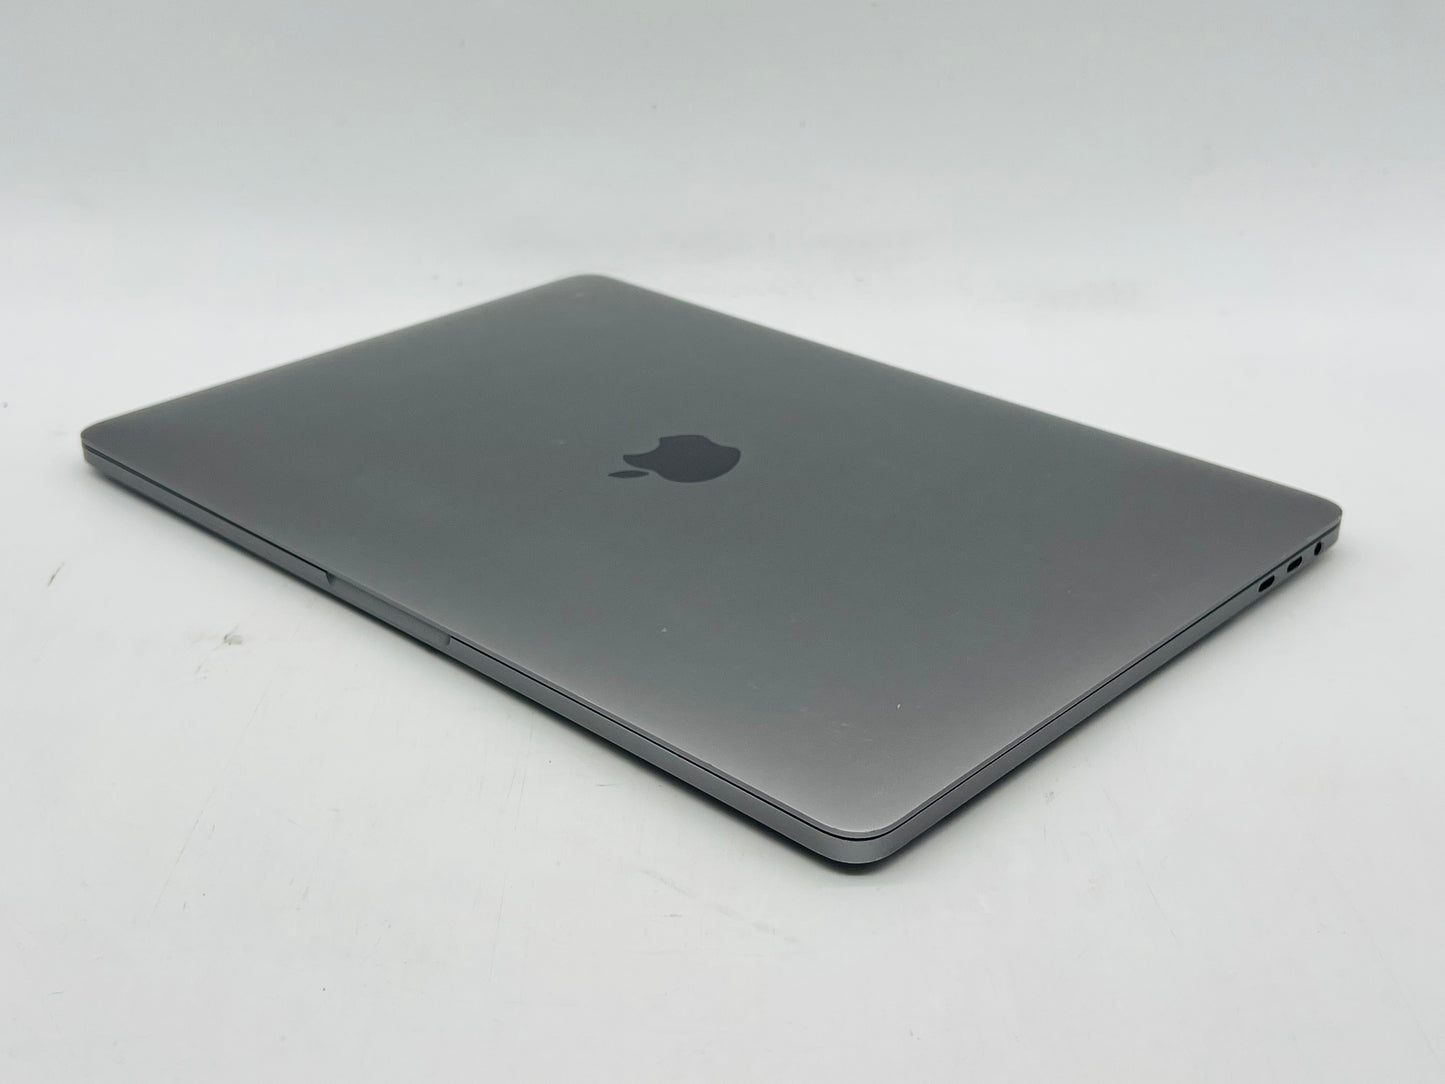 Apple 2019 MacBook Pro 13 in TB 2.4GHz i5 8GB RAM 256GB SSD IIPG655 - Good